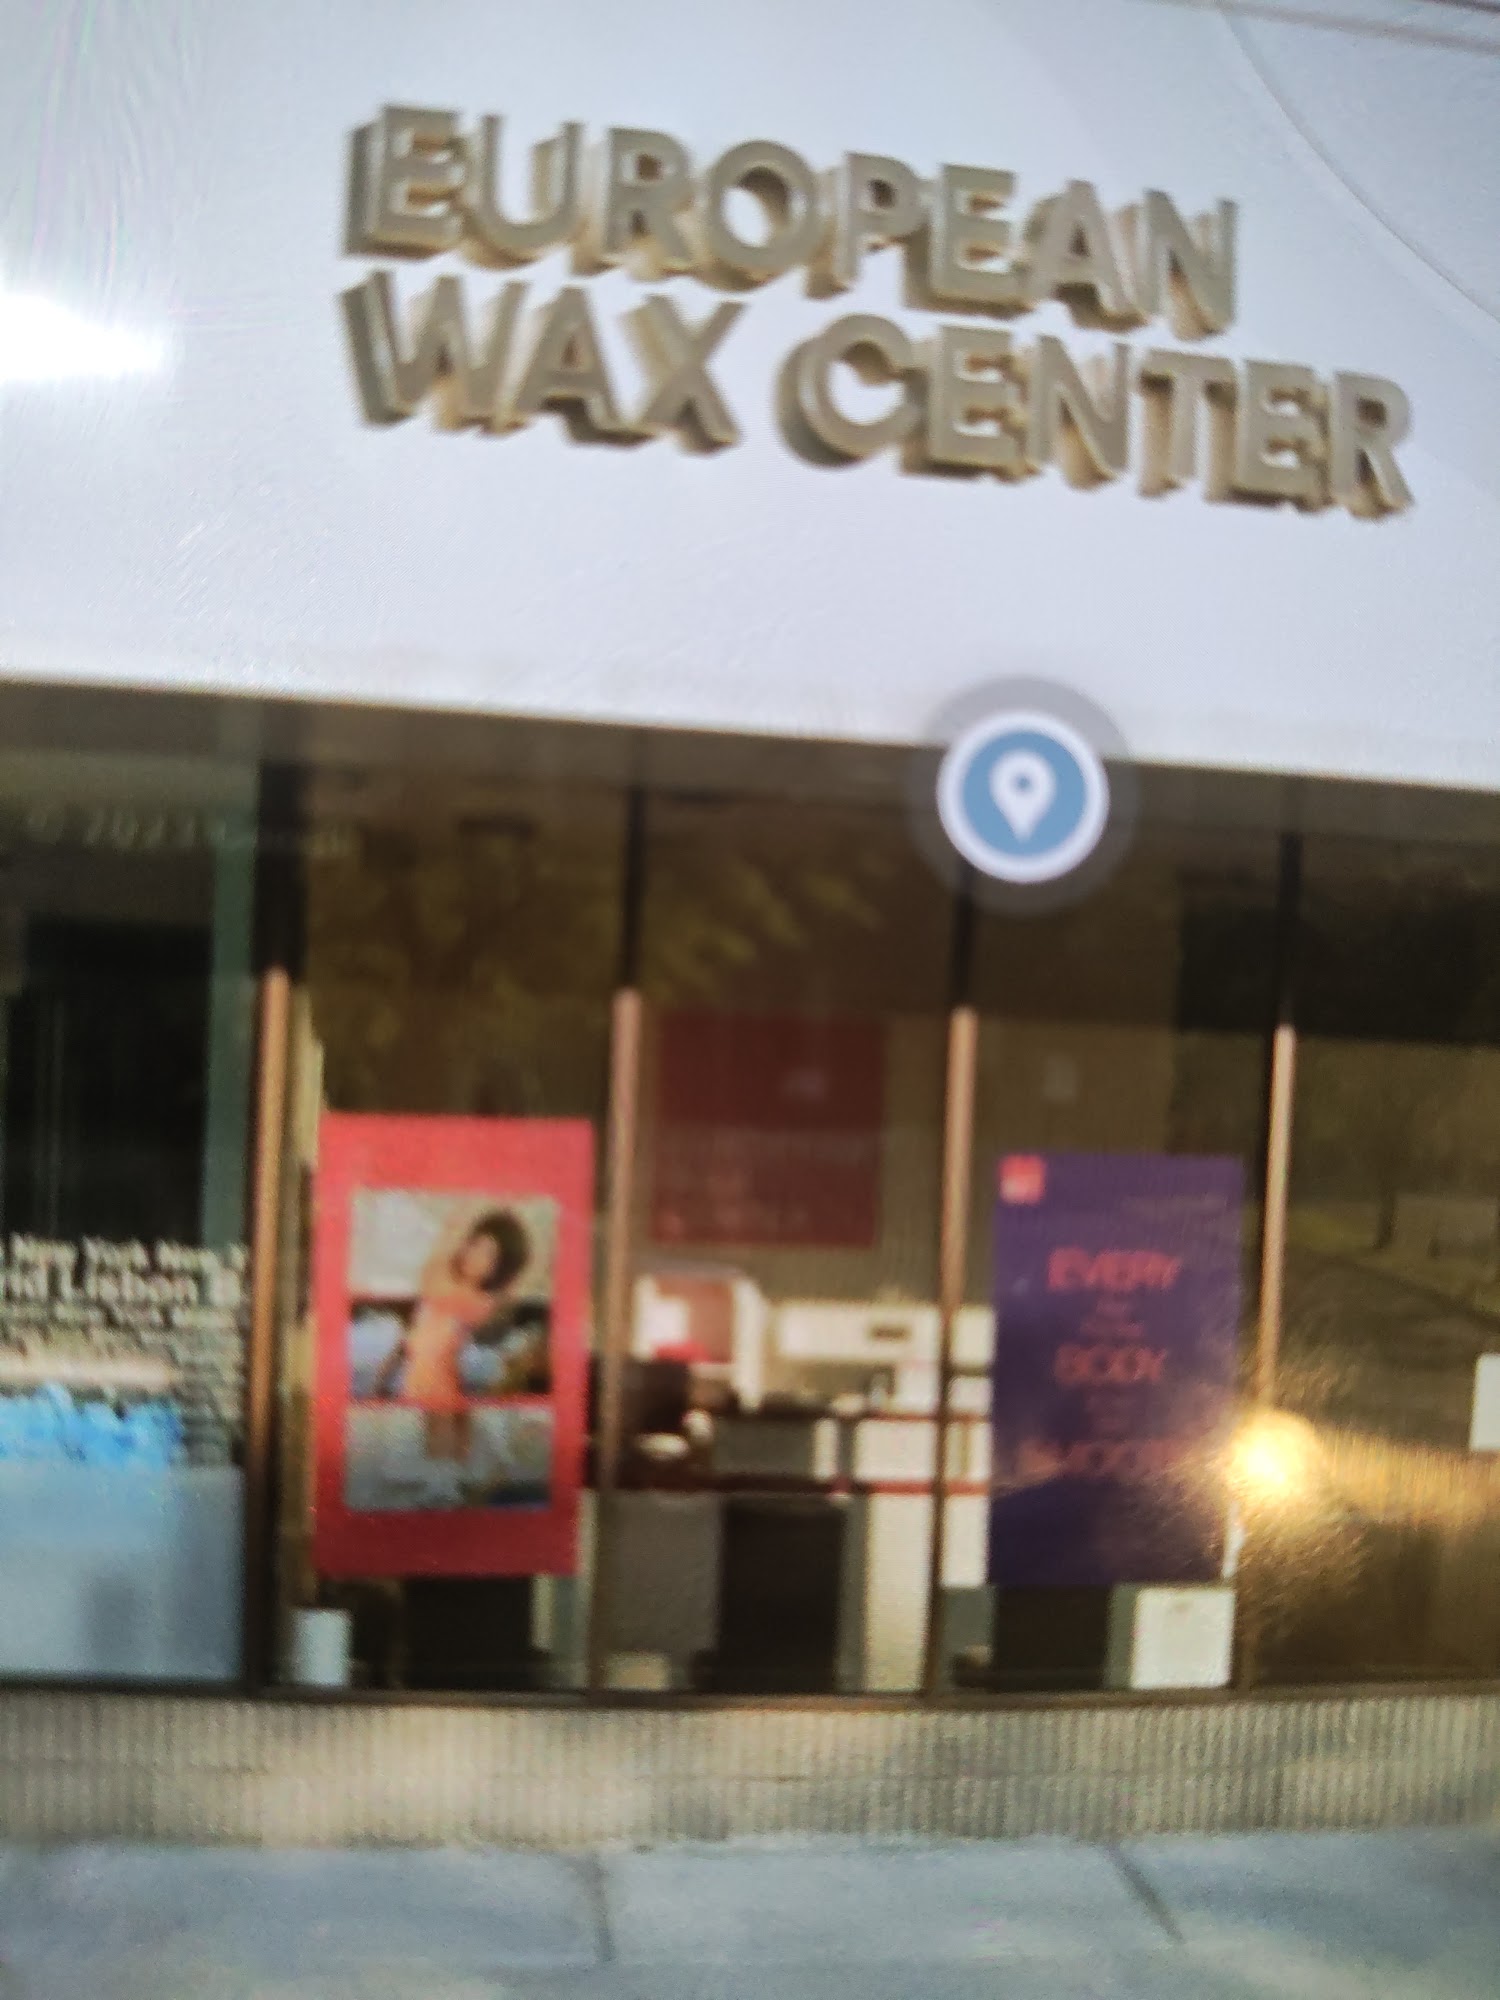 European Wax Center 235 N Central Ave, Hartsdale New York 10530